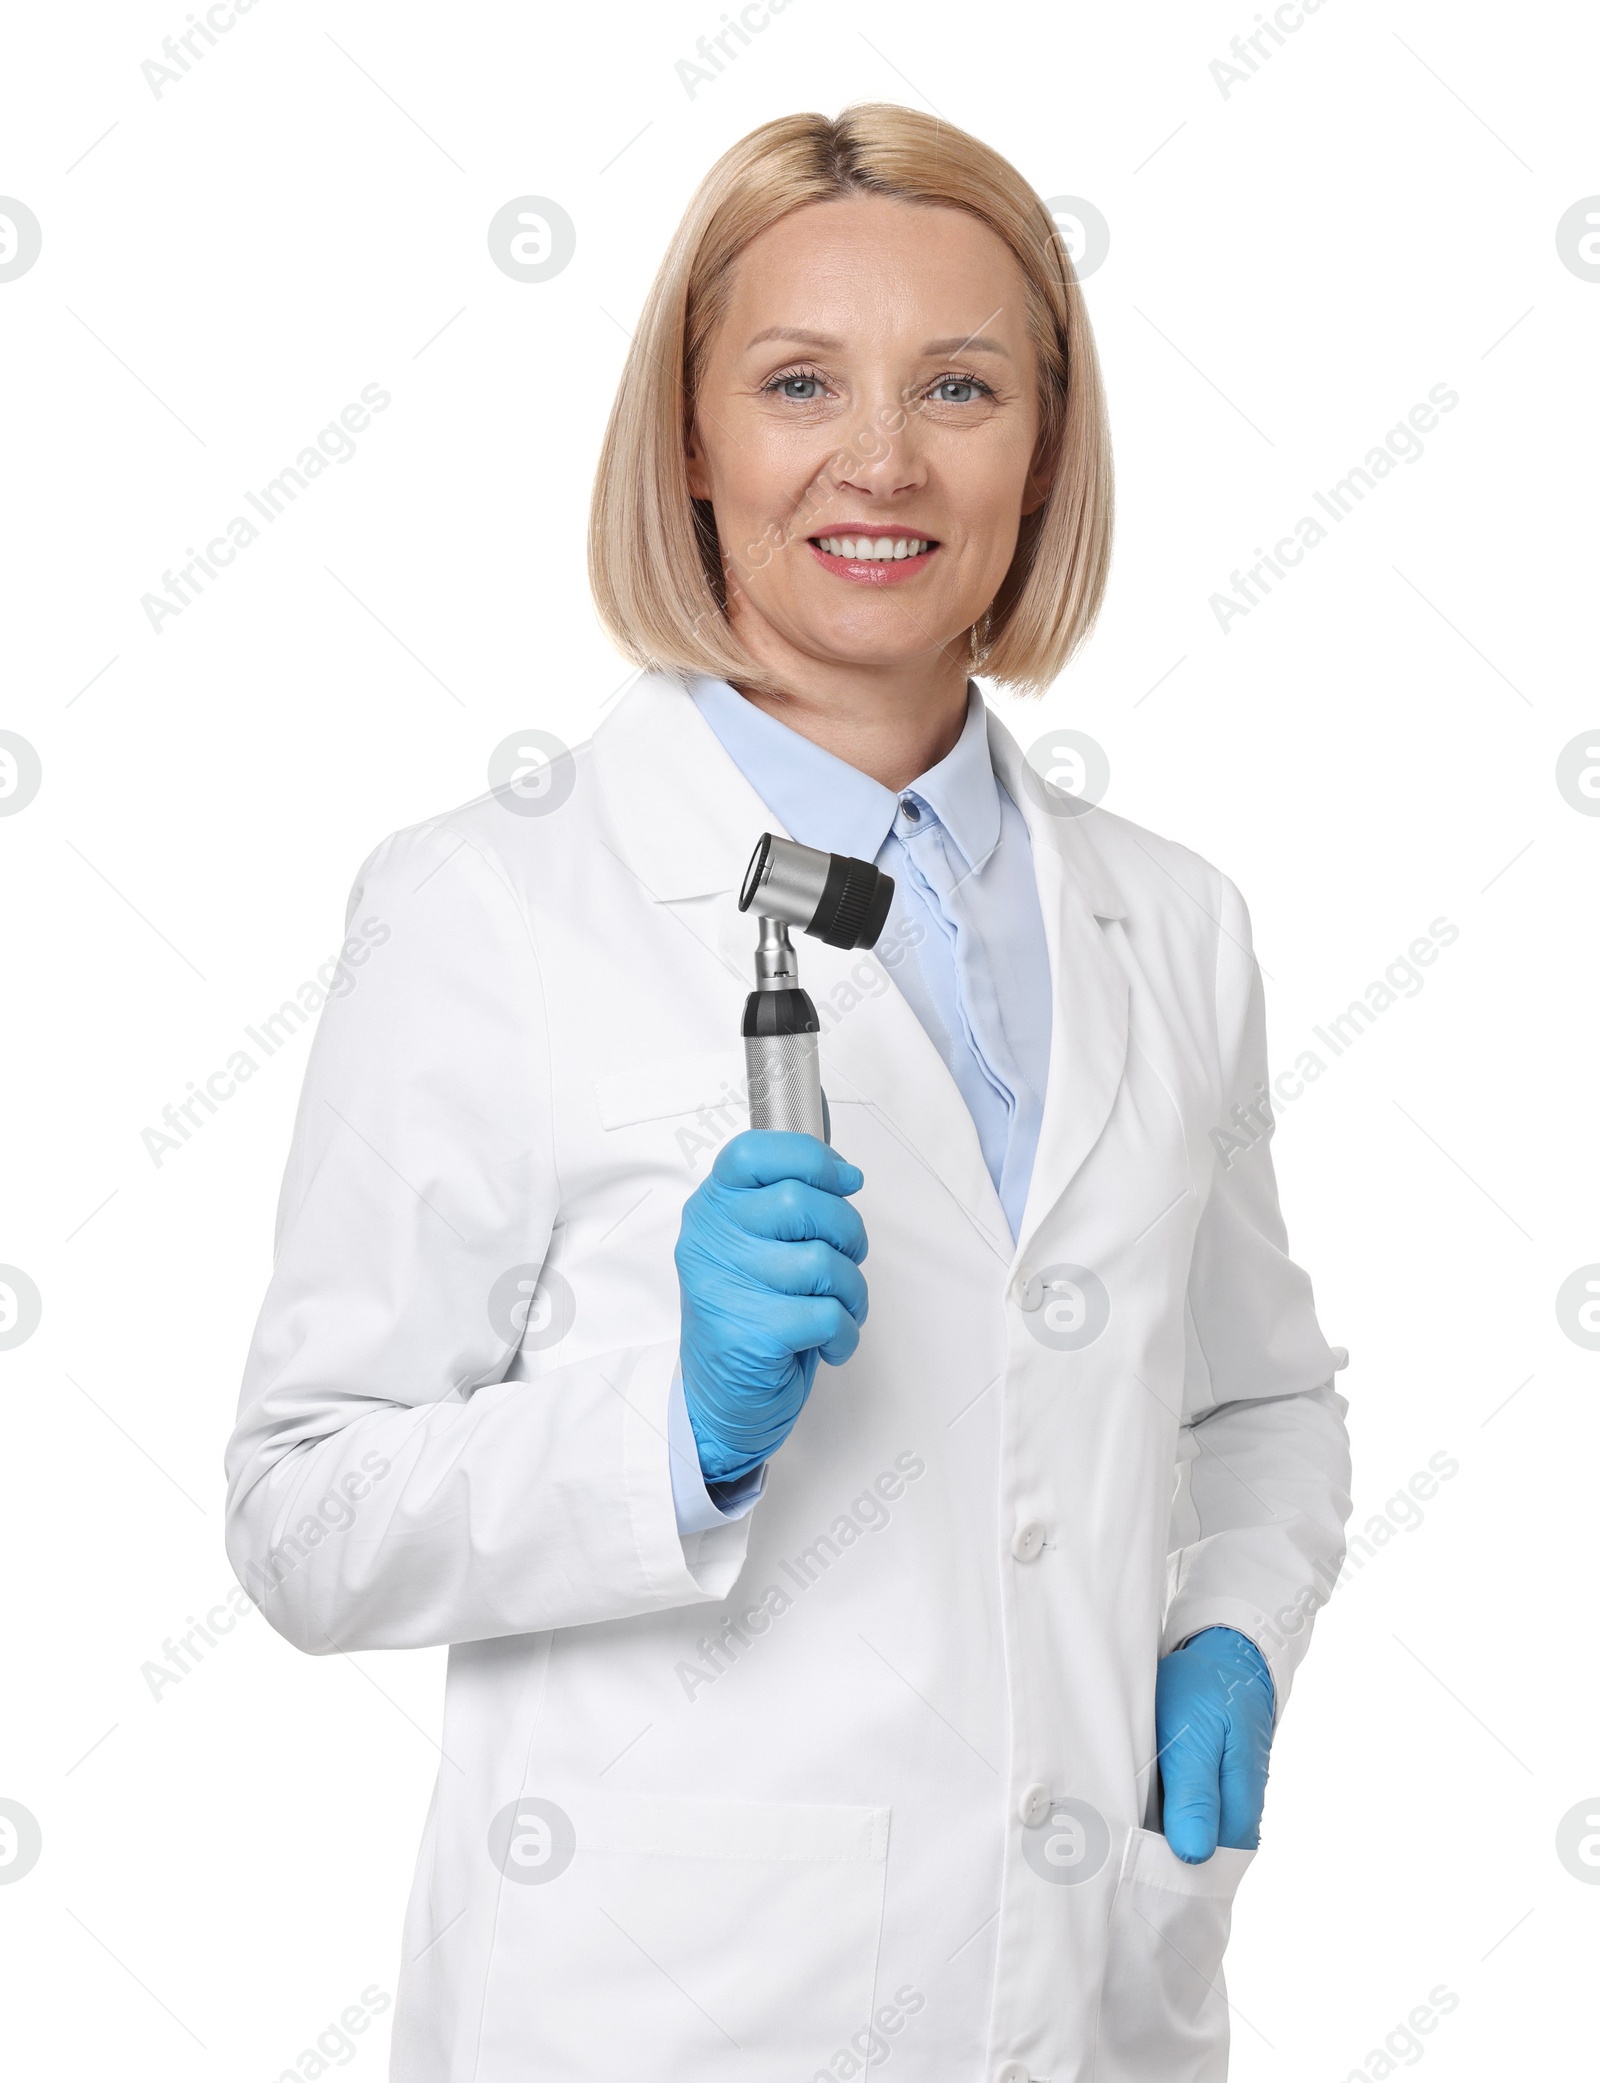 Photo of Happy dermatologist with dermatoscope isolated on white